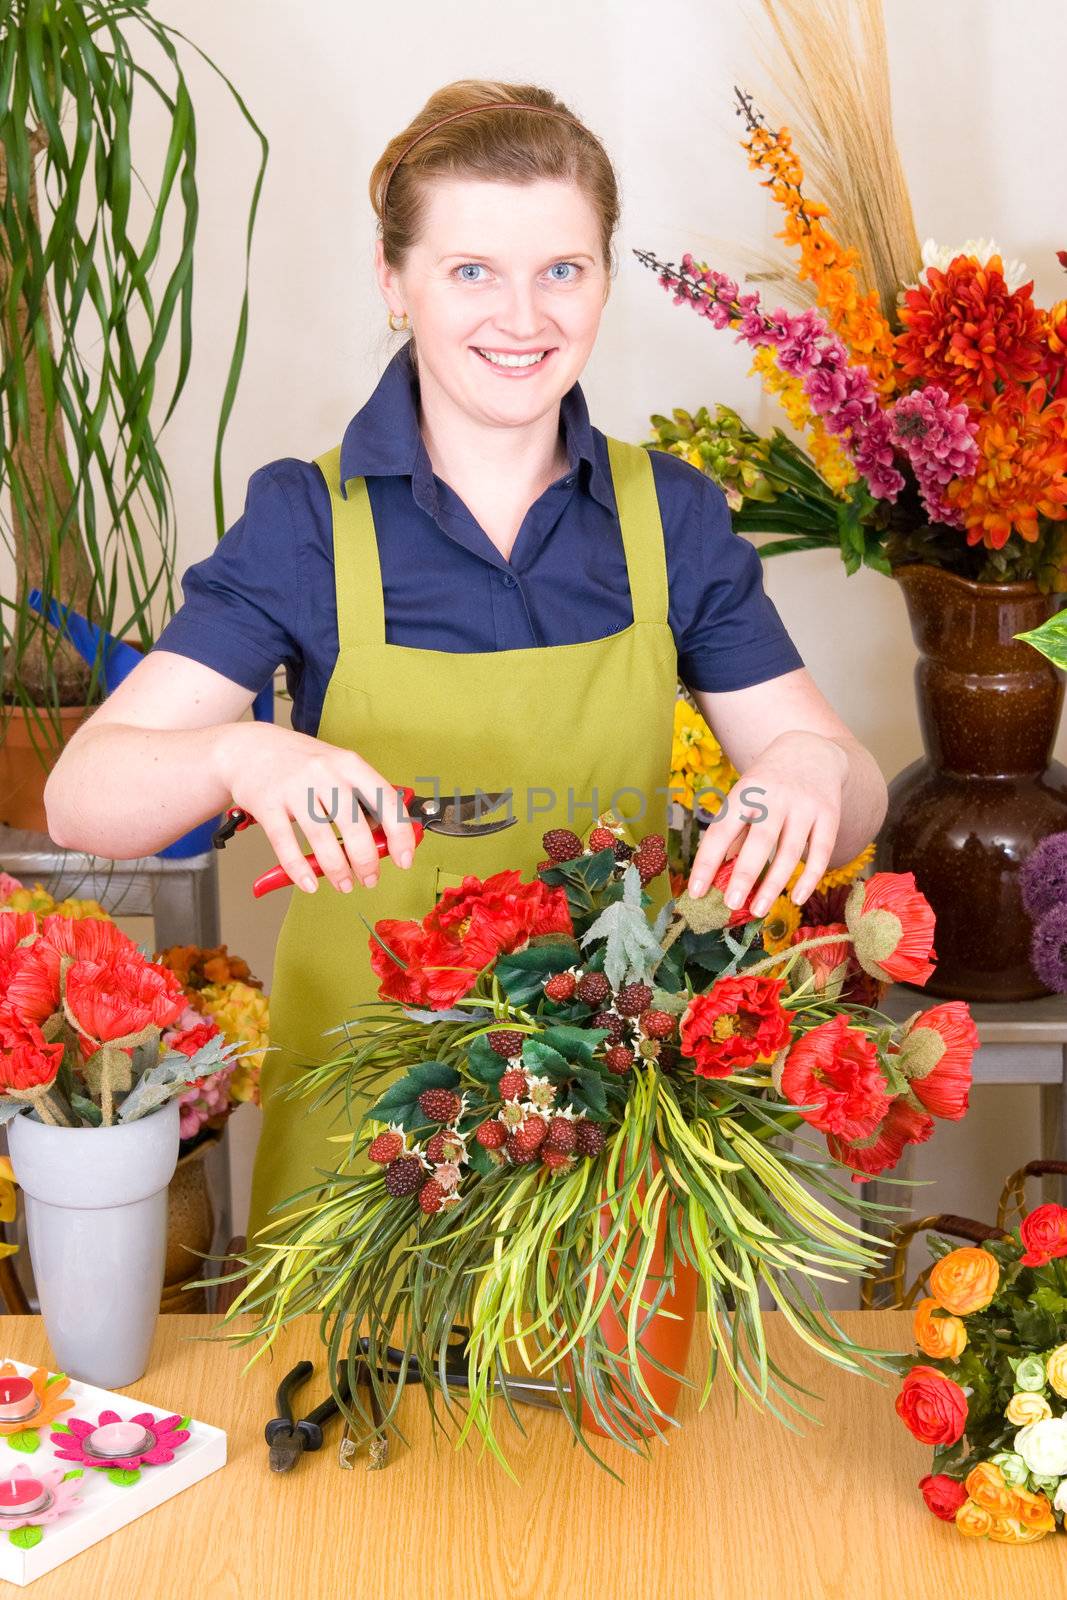 Young Florist in shop preparing flower decoration